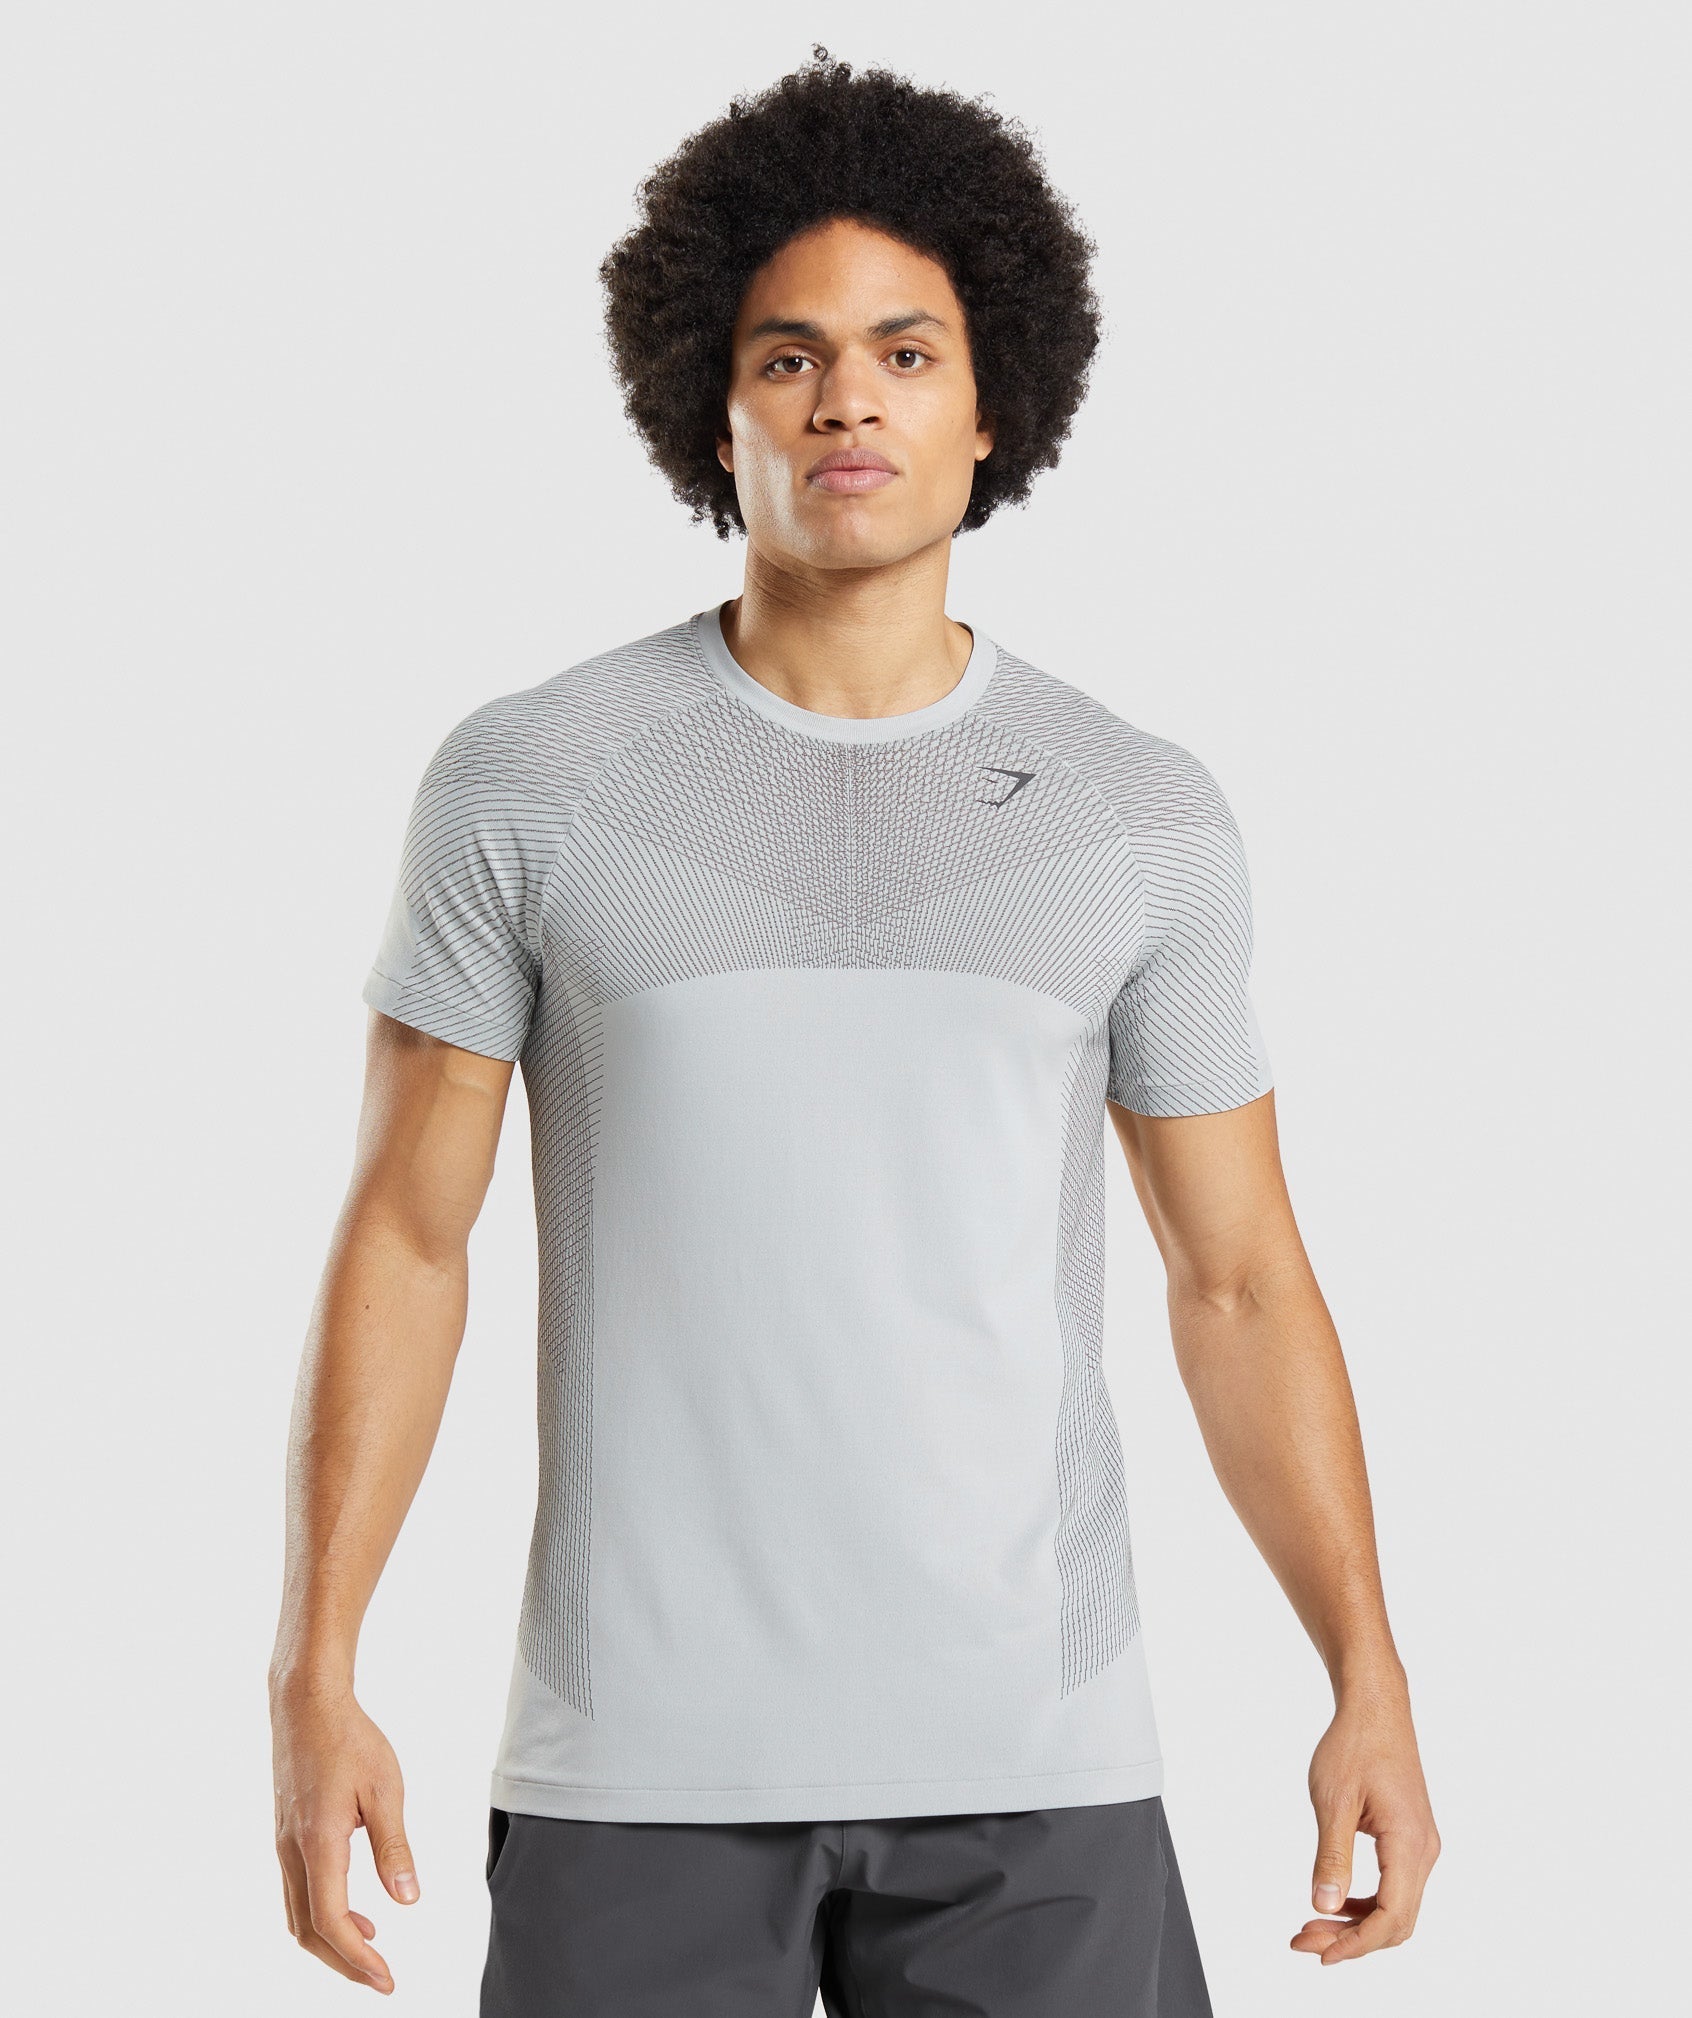 Apex Seamless T-Shirt in Light Grey/Onyx Grey